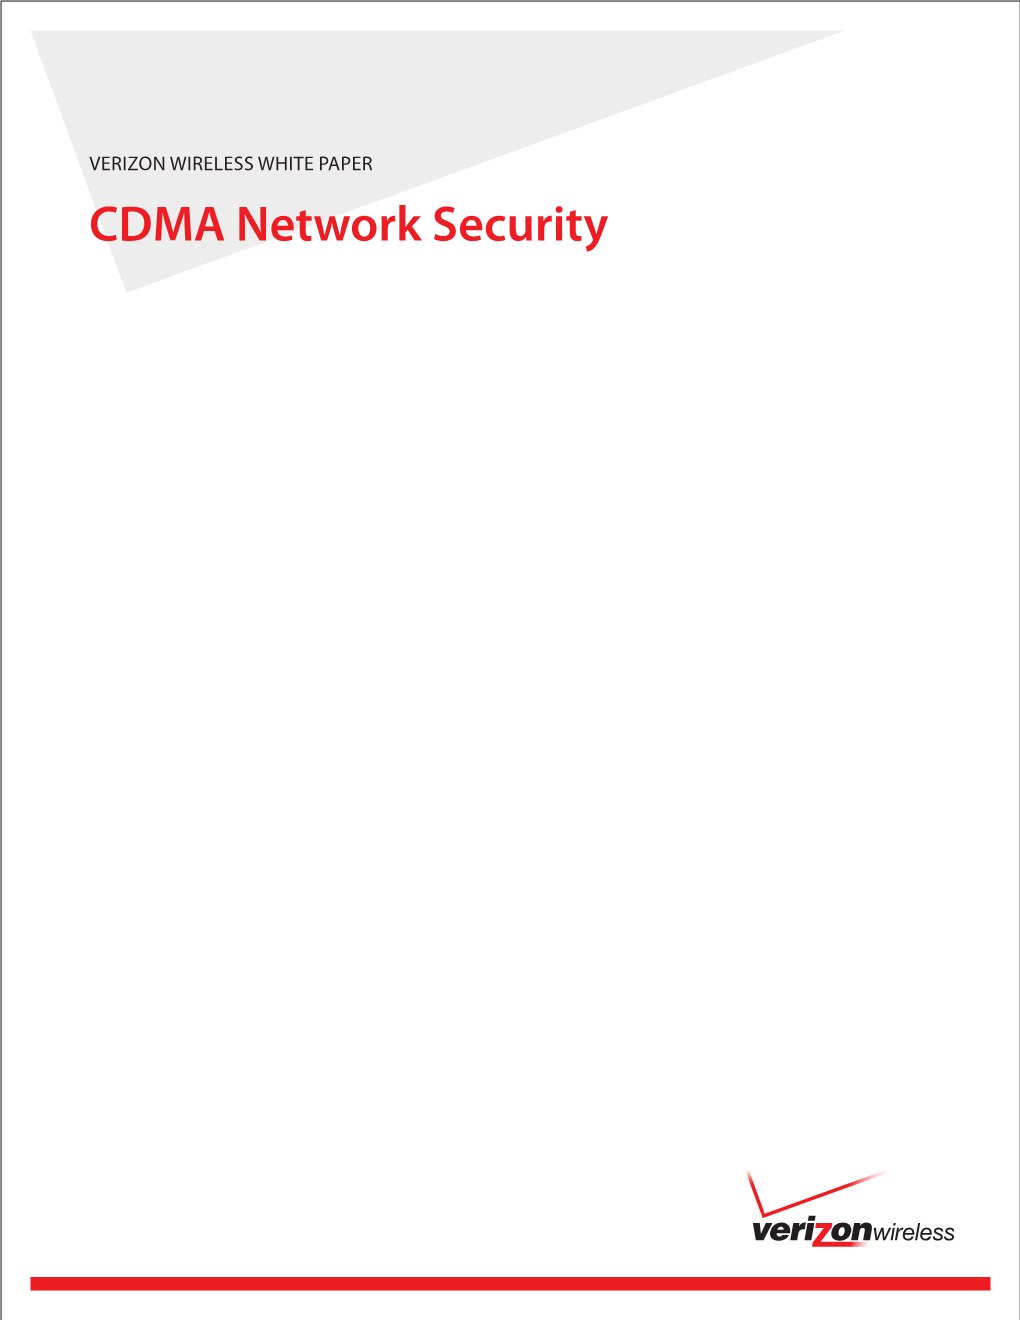 CDMA Network Security Verizon Wireless White Paper CDMA Network Security